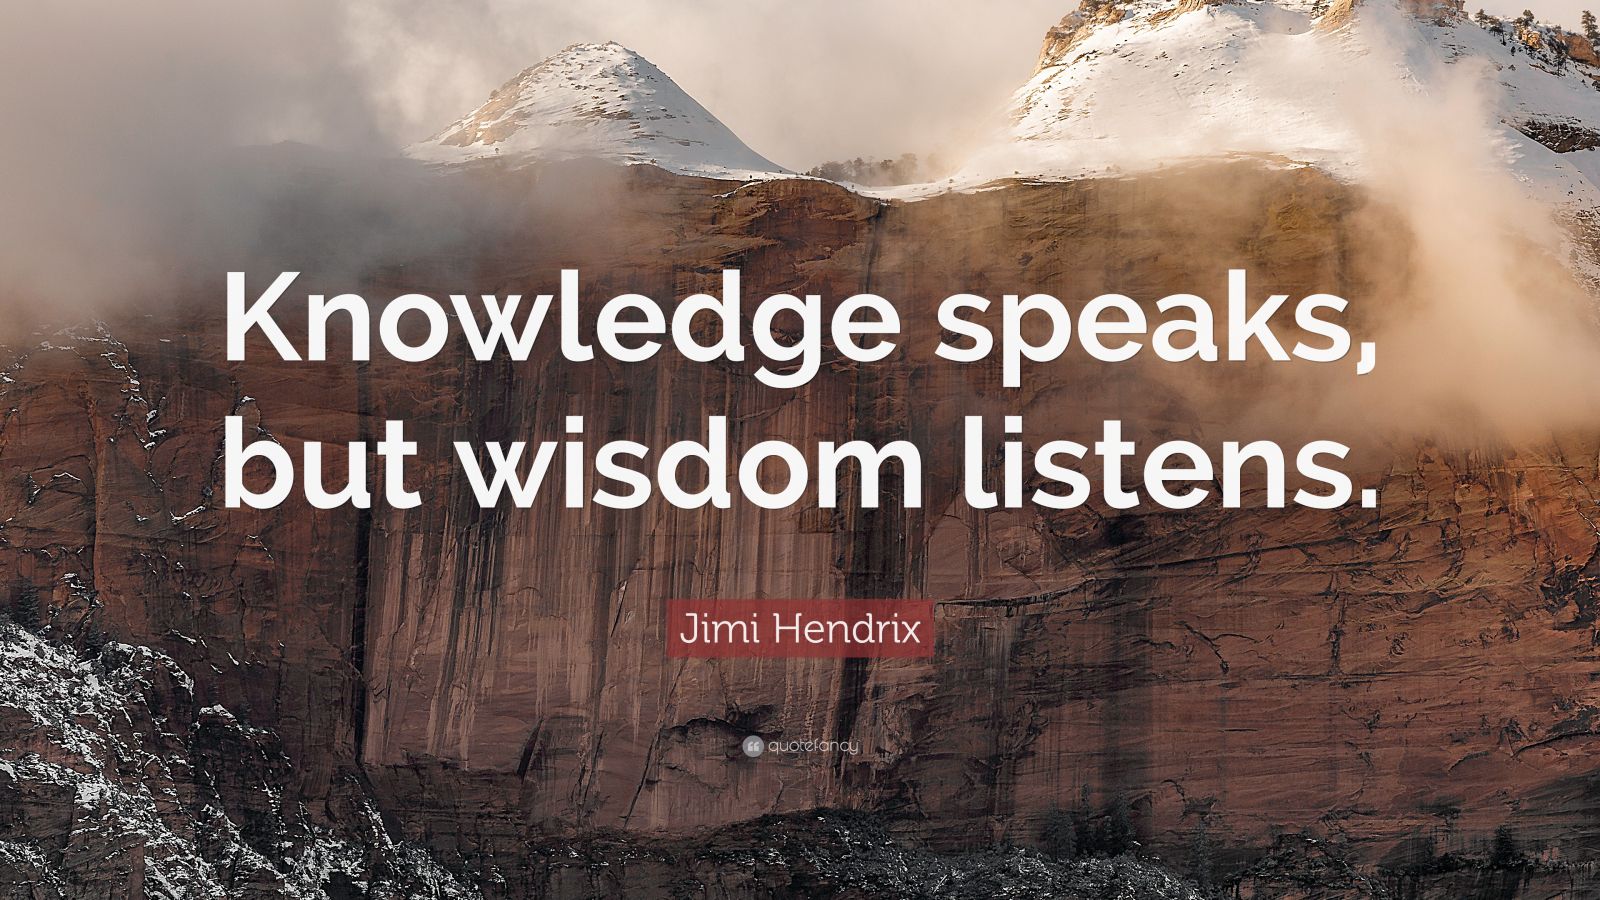 Jimi Hendrix Quote: “Knowledge speaks, but wisdom listens.” (19 wallpapers ...